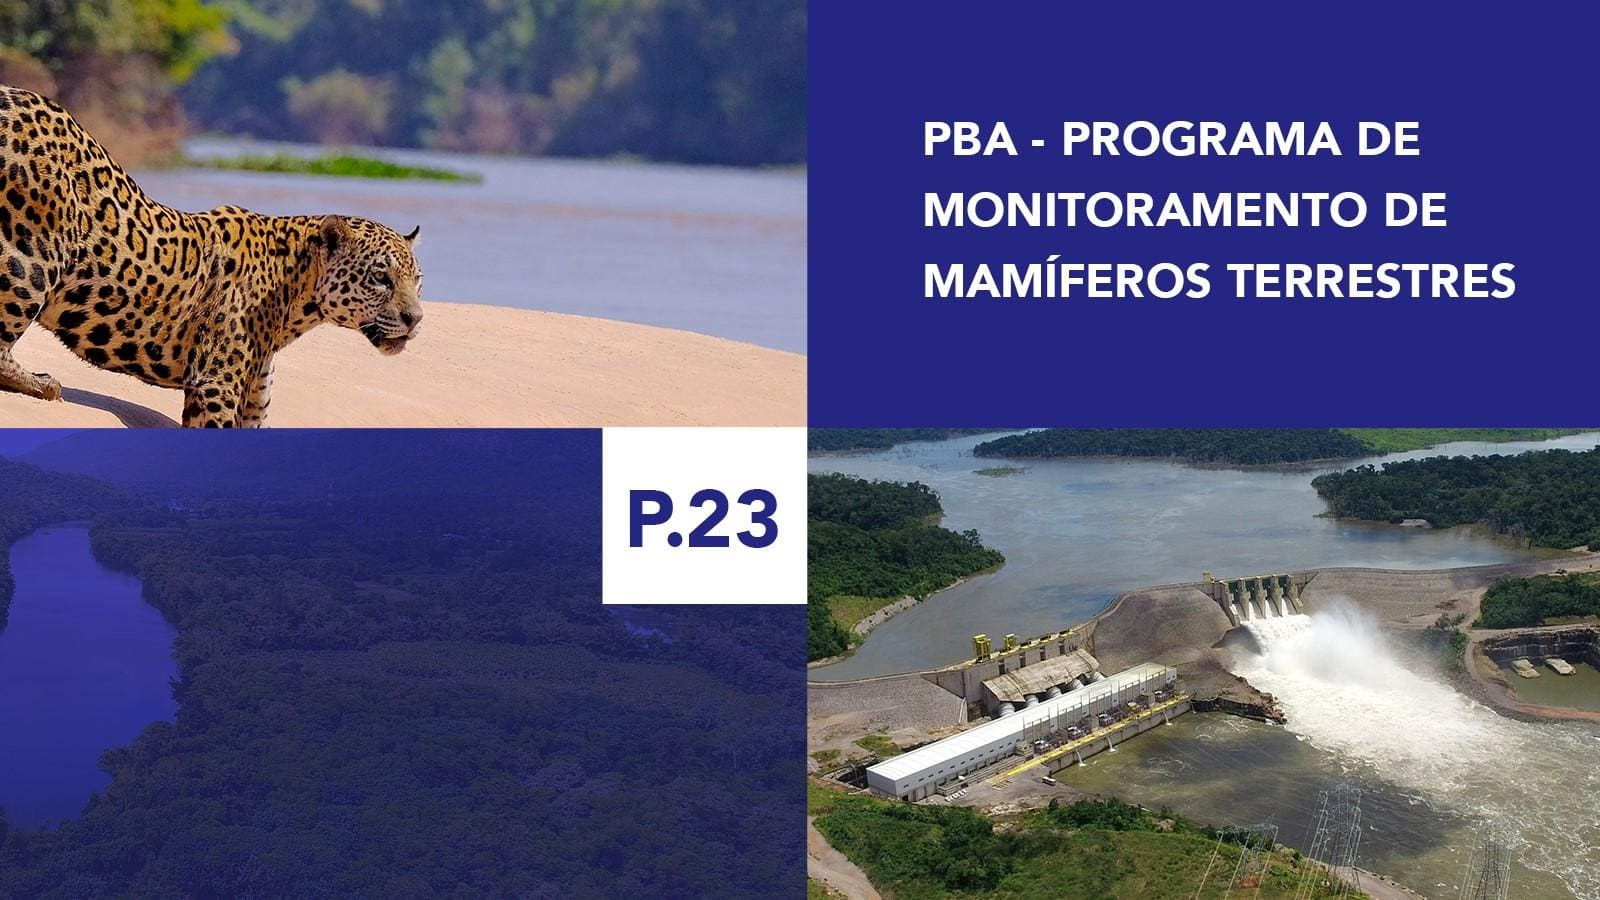 P.23 - Programa de Monitoramento de Mamíferos Terrestres